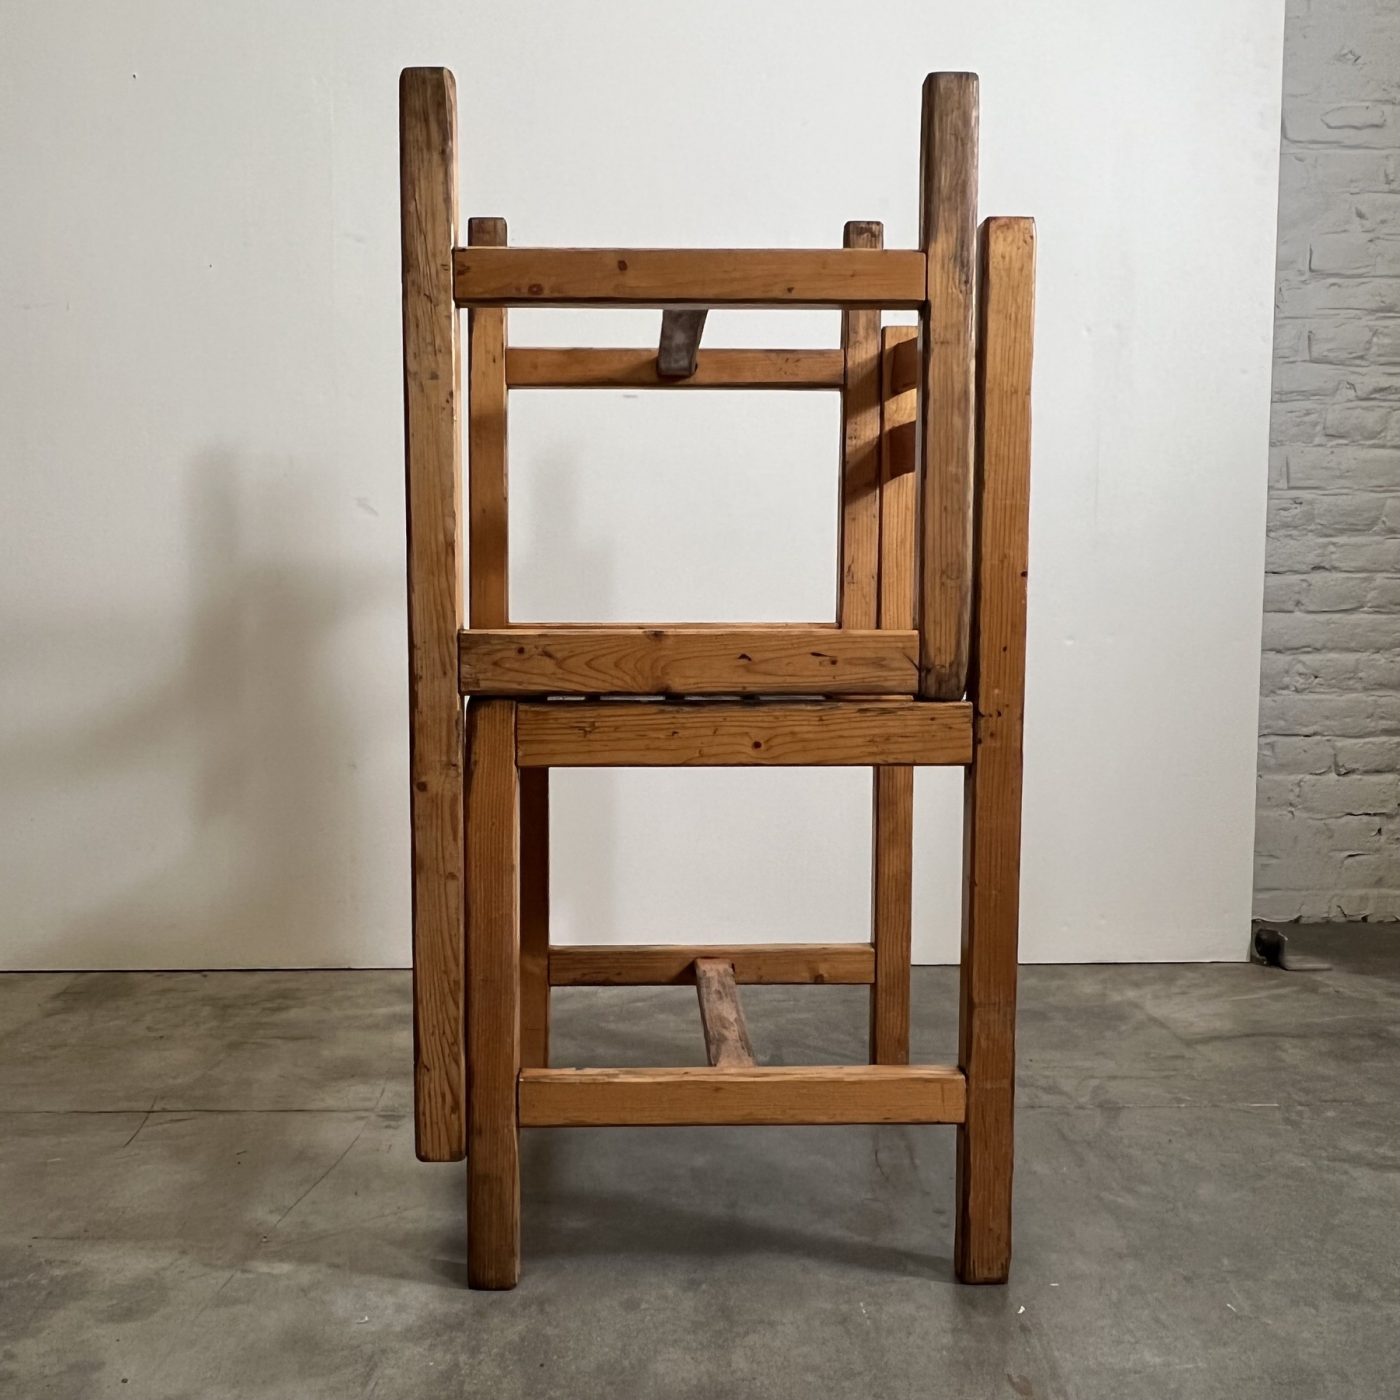 objet-vagabond-chairs0004